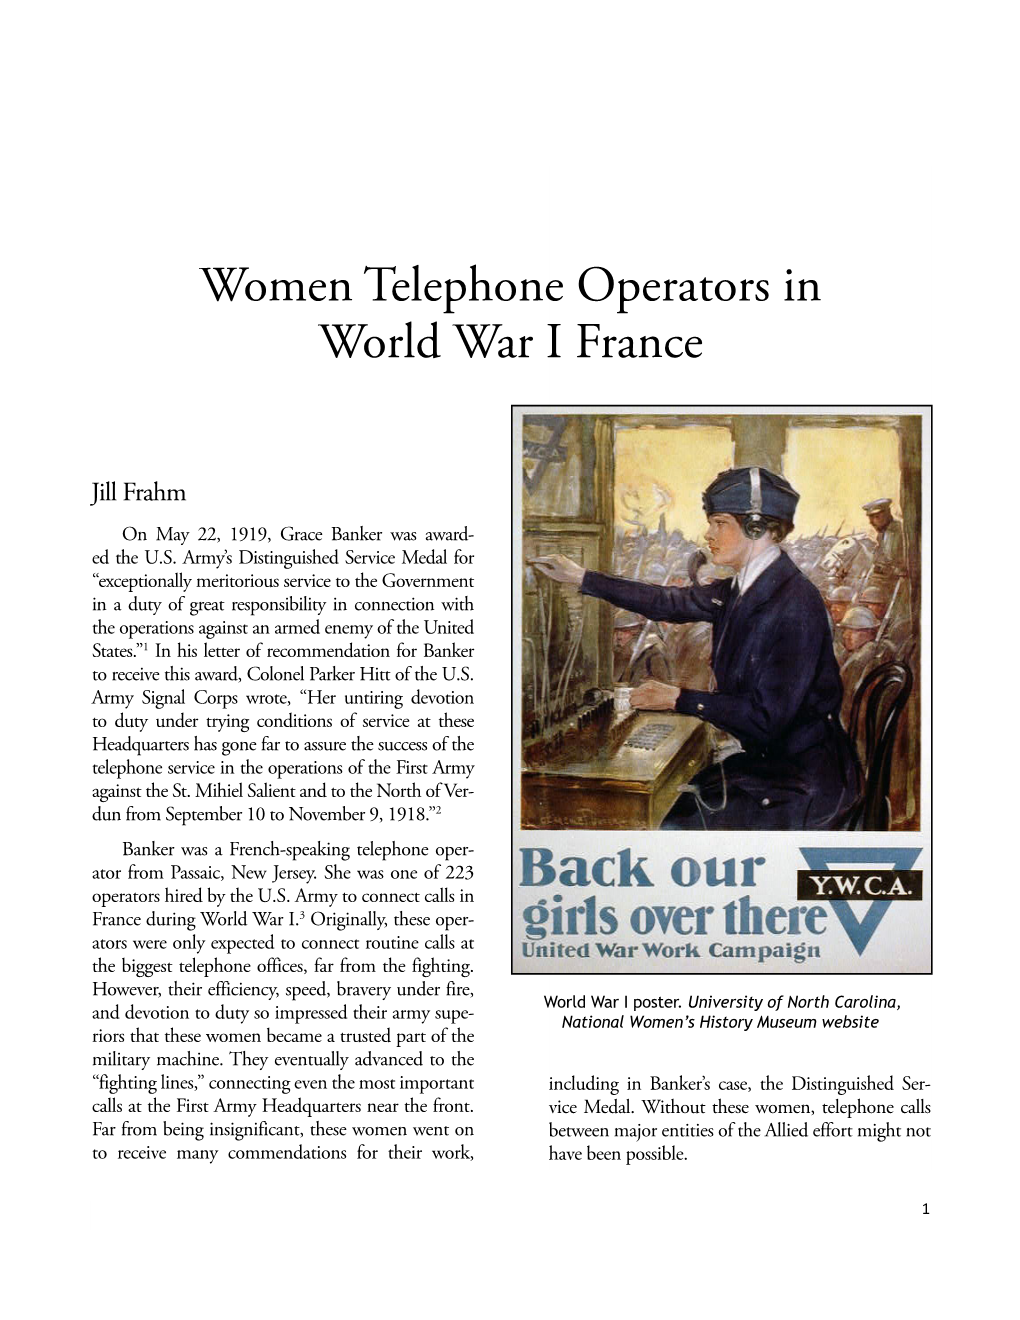 Women Telephone Operators in World War I France